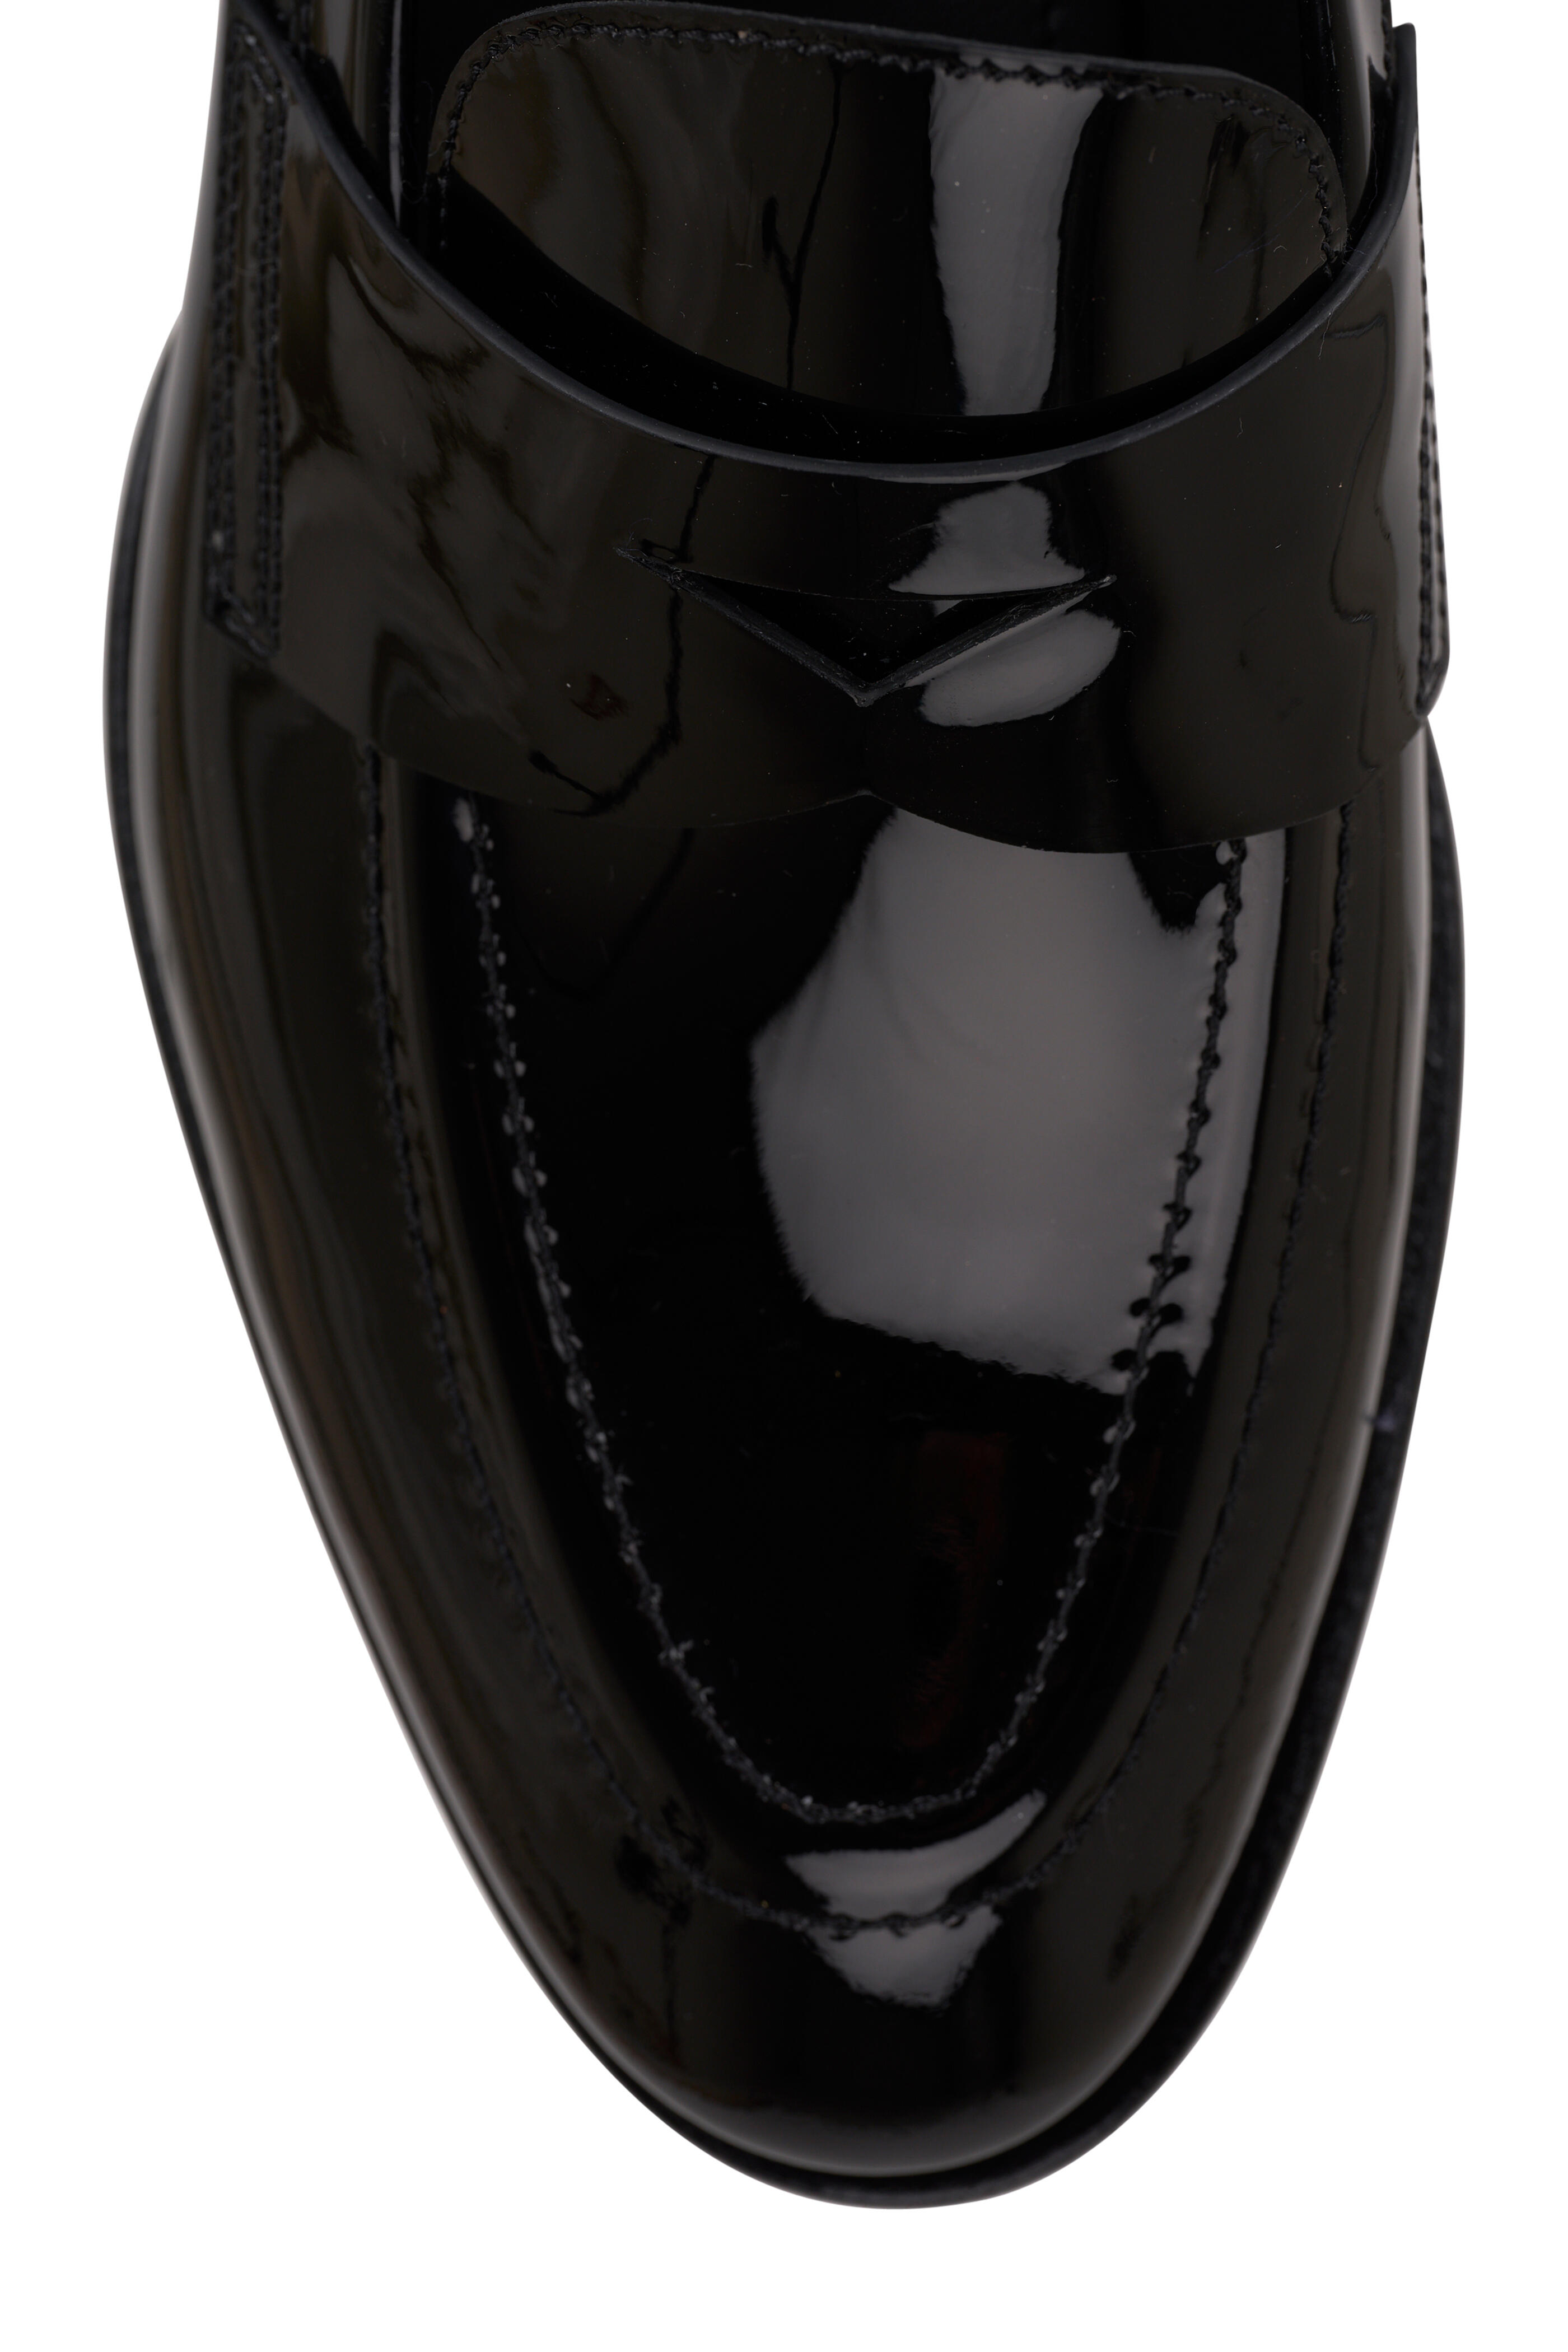 Santoni - Facile Black Patent Leather Penny Loafer